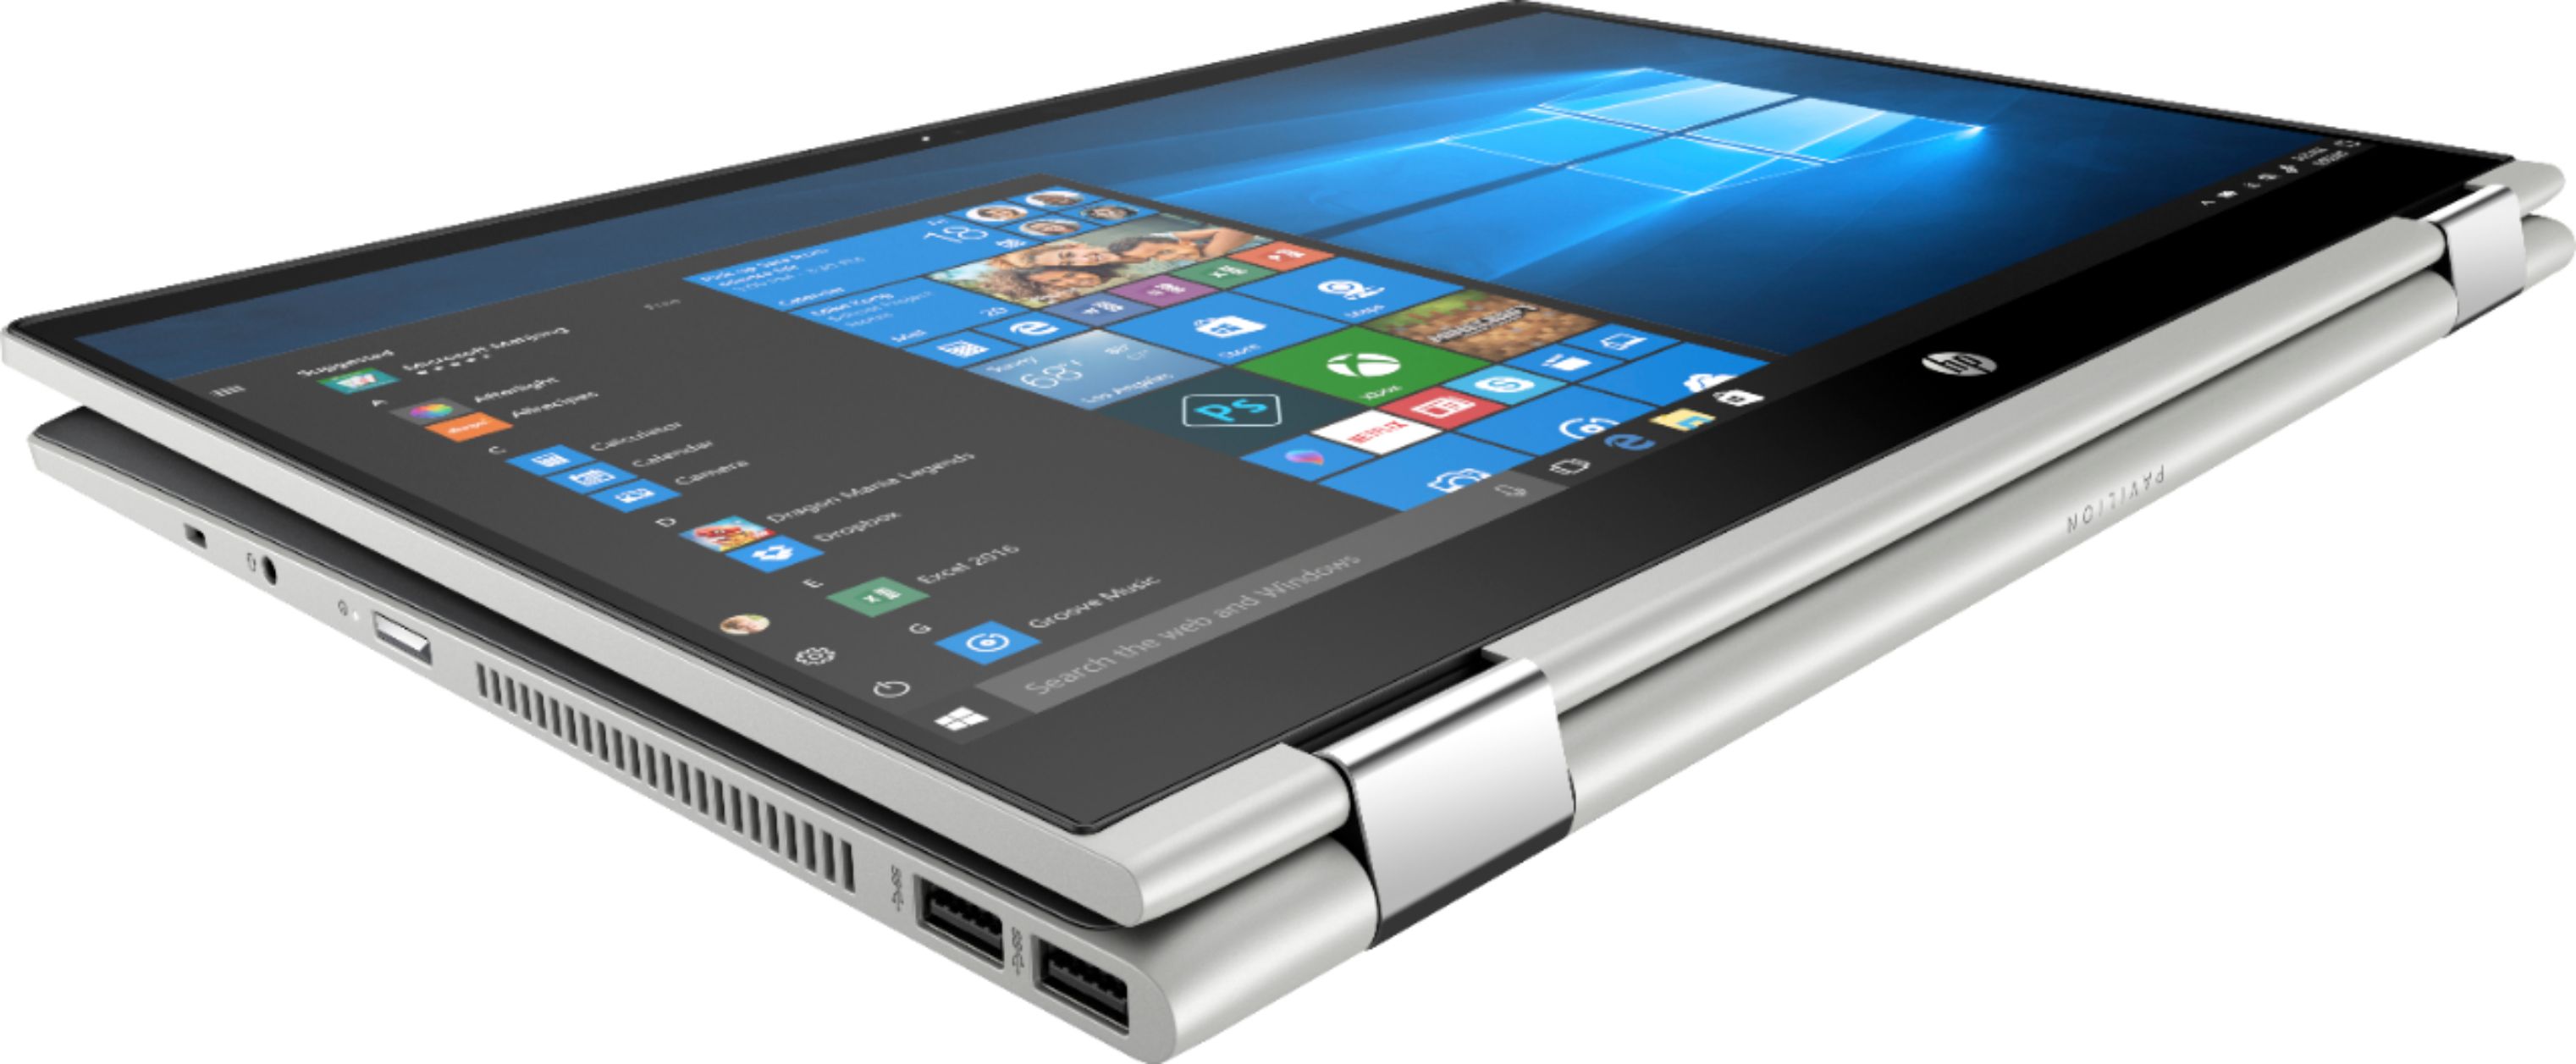 HP Pavilion x360 M3-u001dx 2-in-1 13.3 Touch Laptop (Intel Core i3, 6GB  Memory, 500GB Hard Drive, Silver) - Laptop Specs